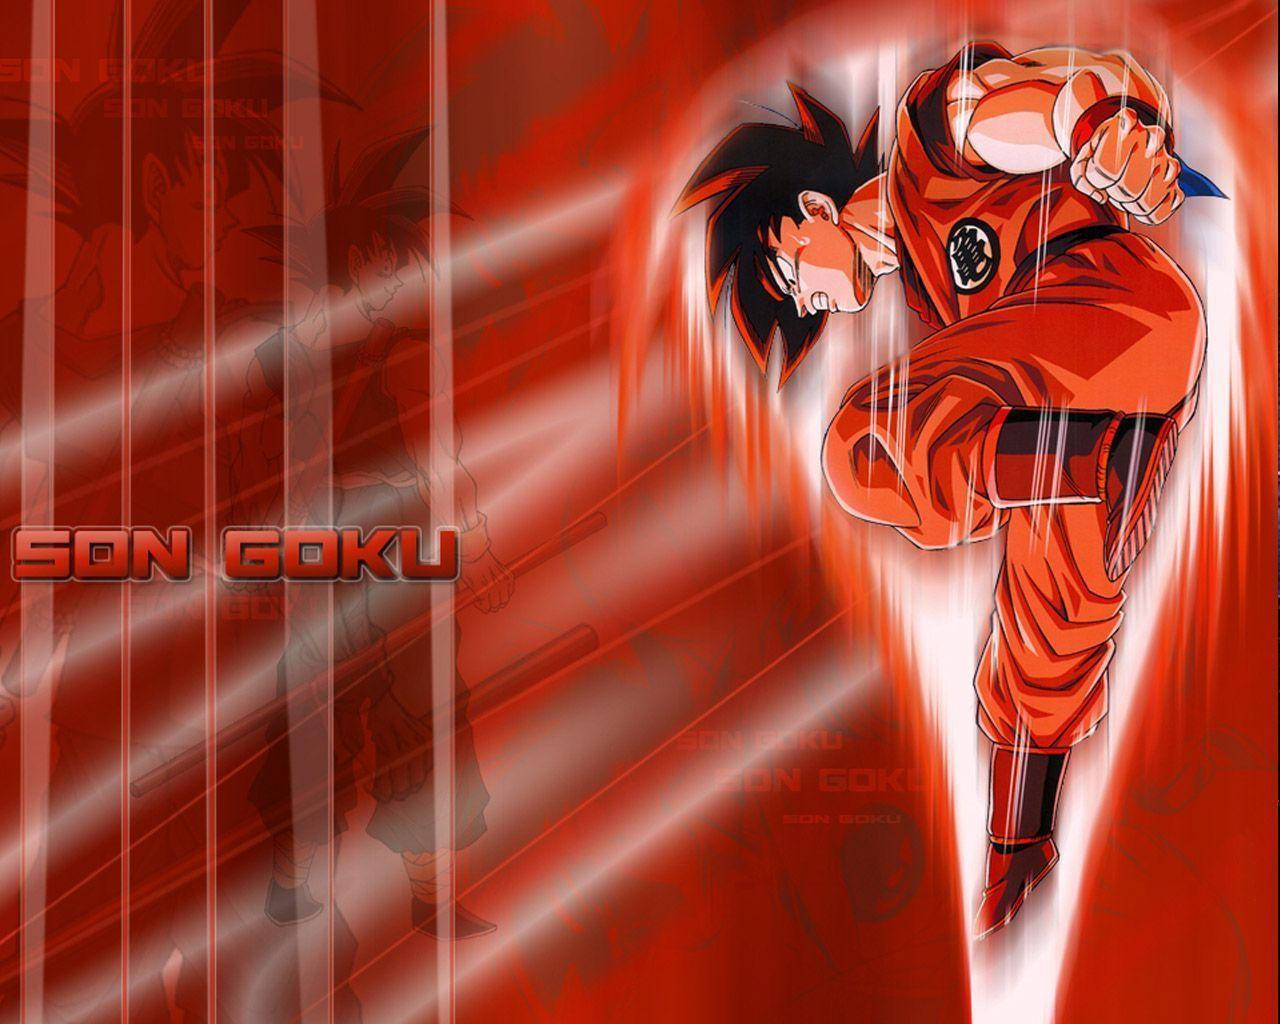 Goku 1280X1024 Wallpaper and Background Image